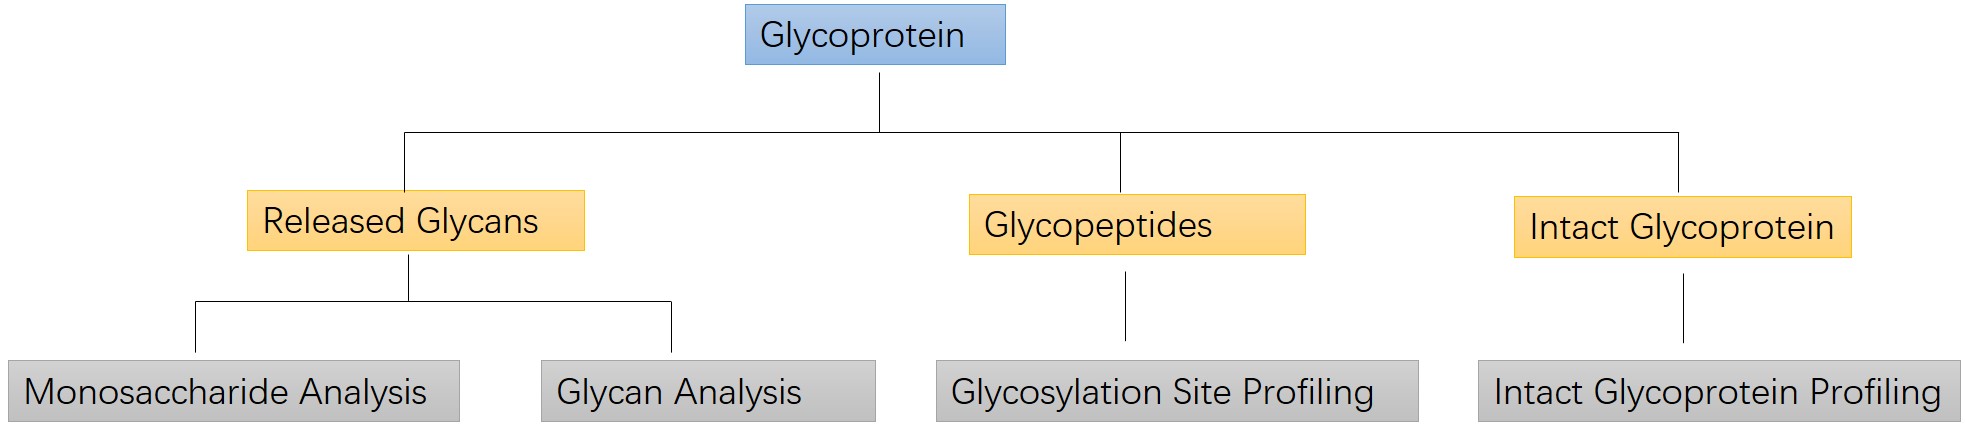 Glycoprotein analysis